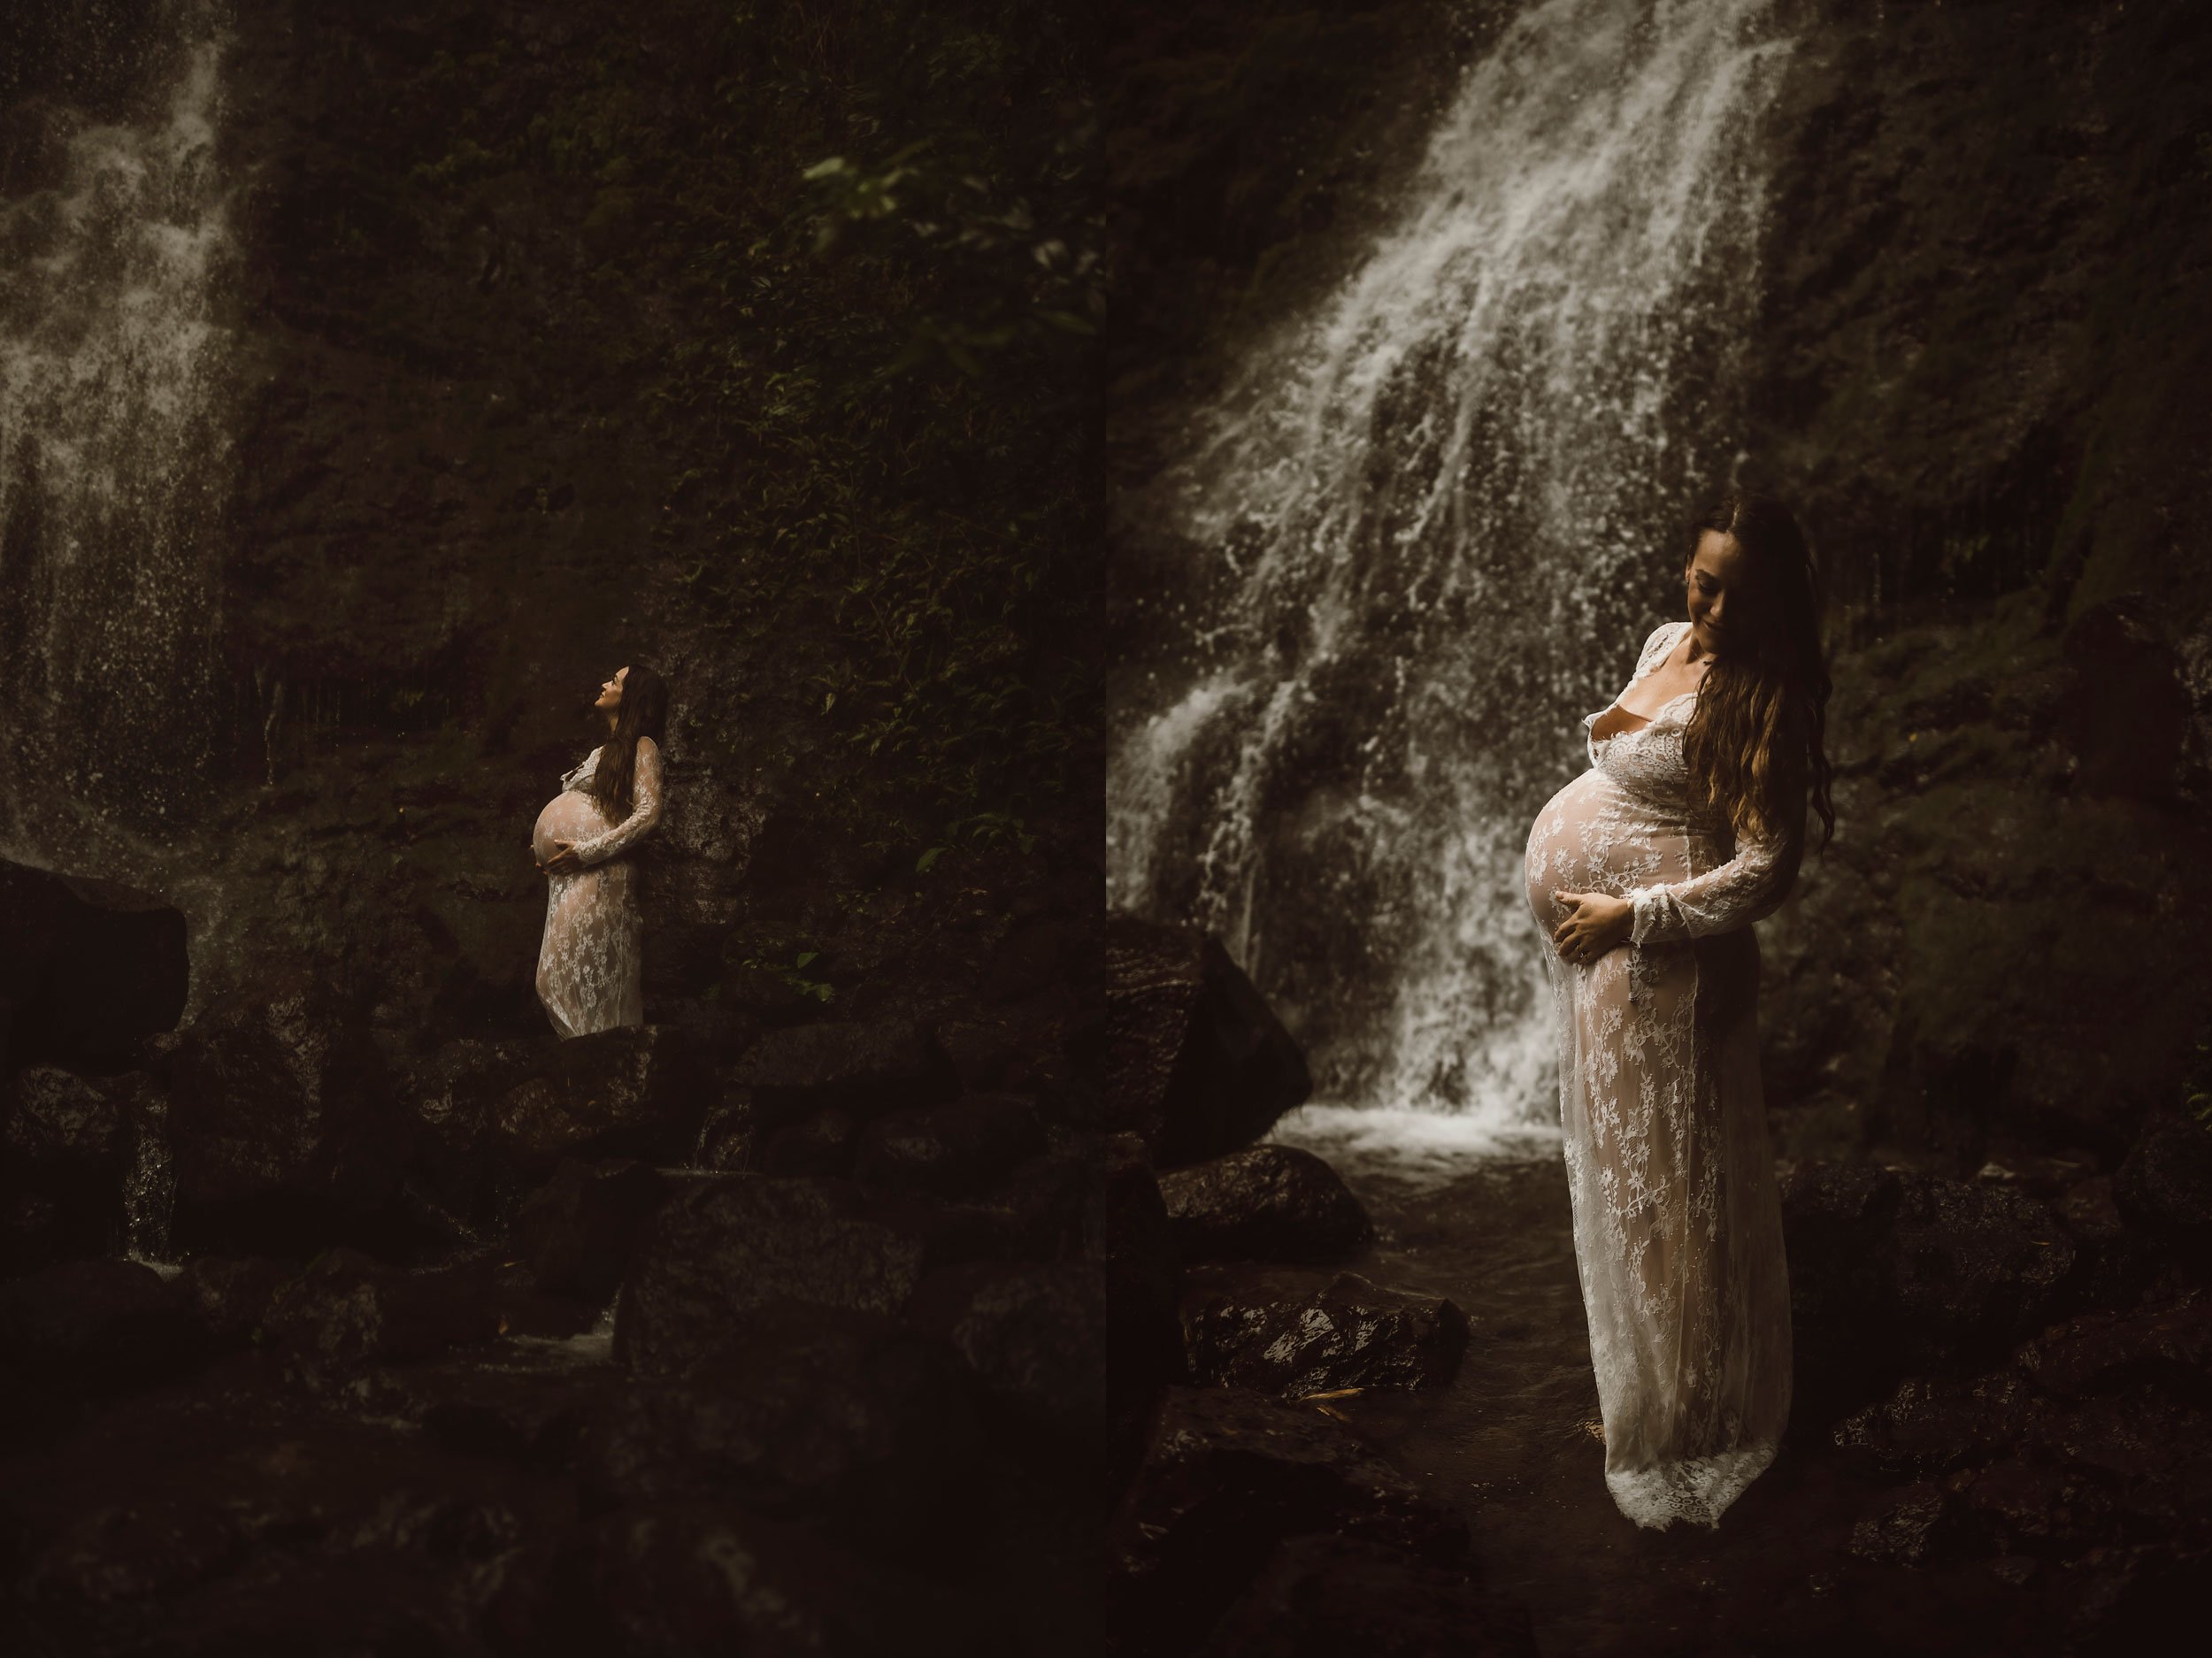 oahu-hawaii-waterfall-maternity-photos-lulumahu-13.jpg